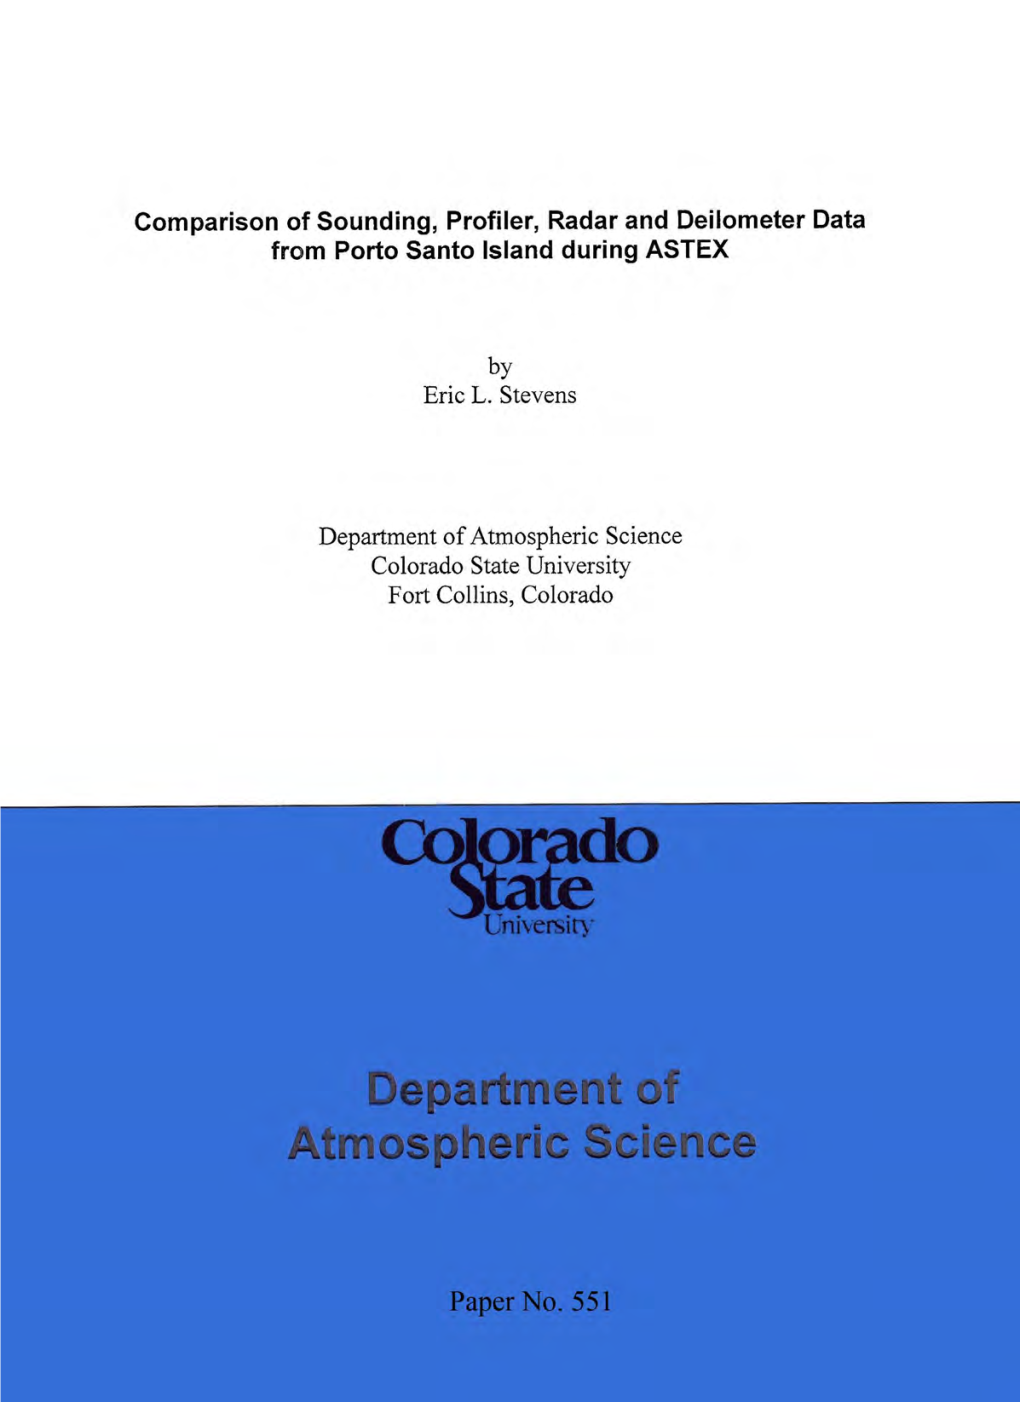 Comparison of Sounding, Profiler, Radar and Deilometer Data from Porto Santo Island During ASTEX